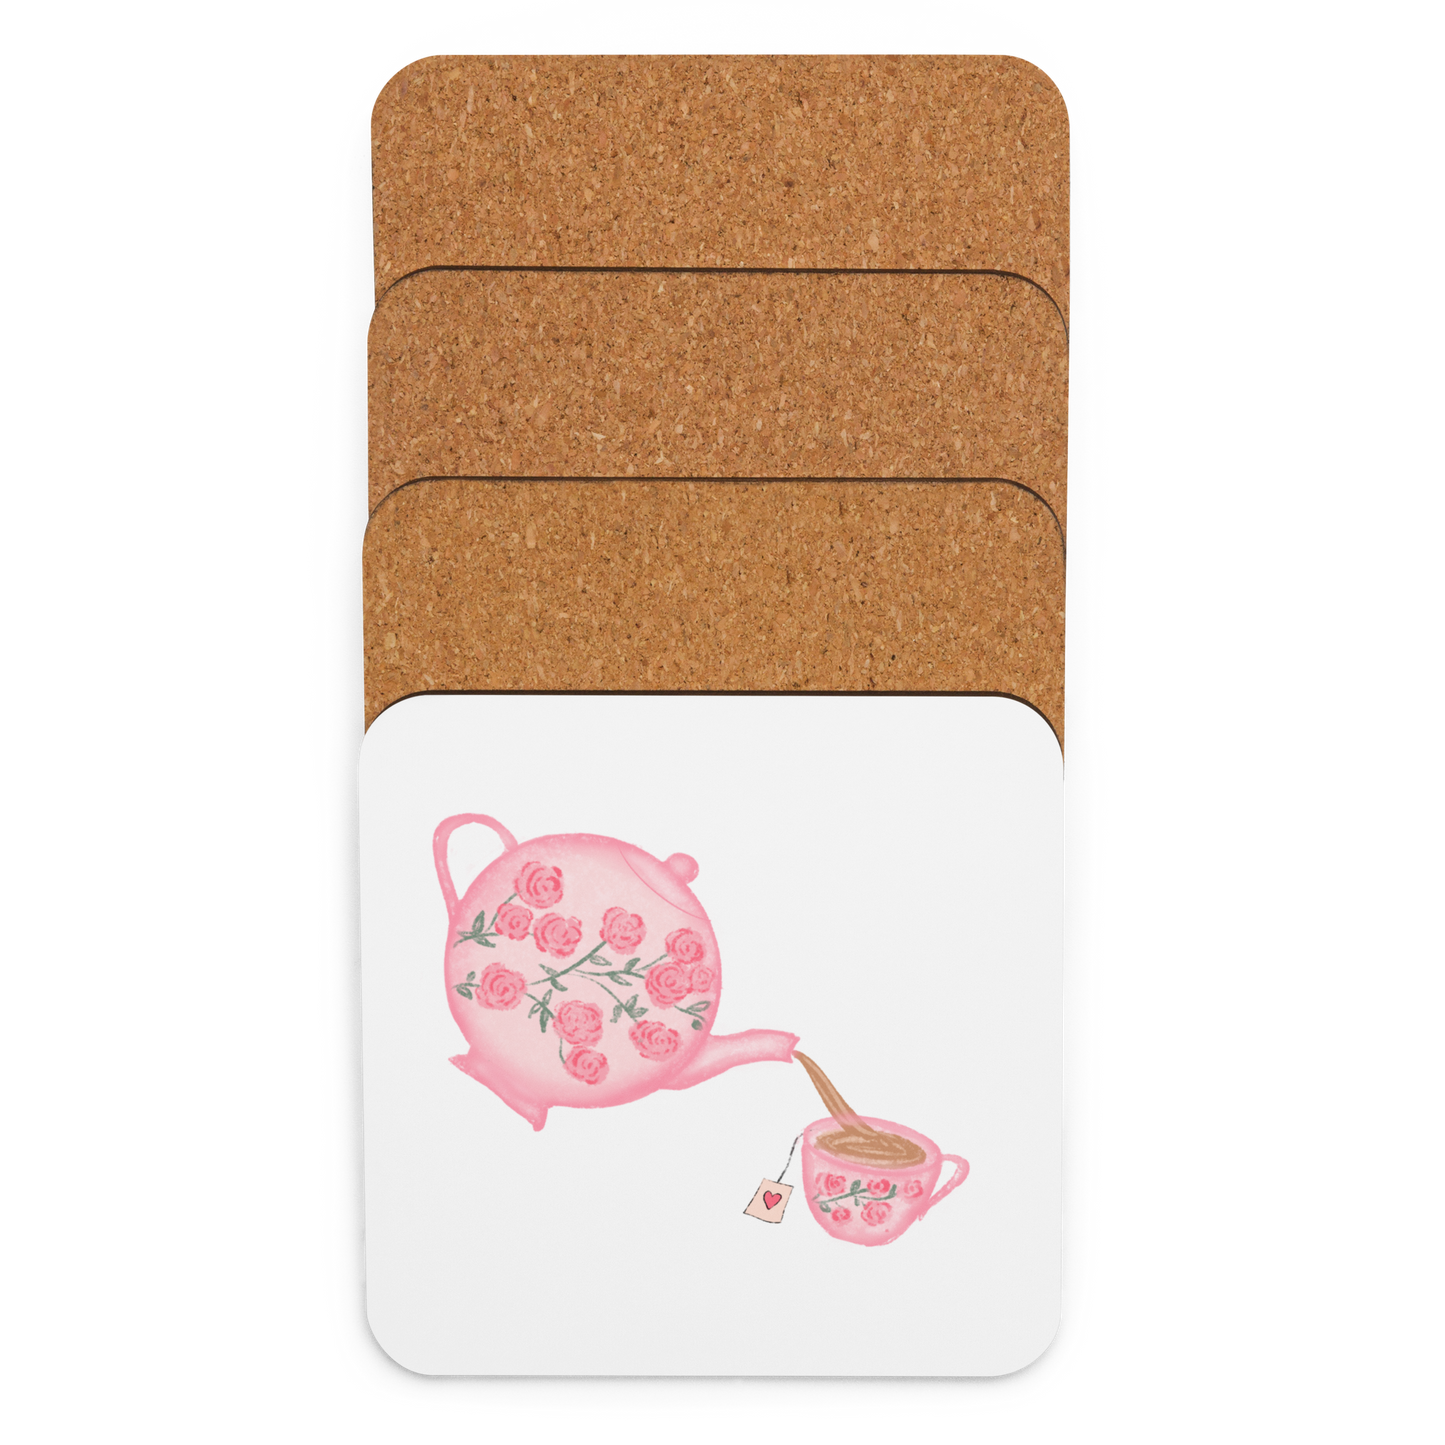 Floral Teatime Coaster (Individual Coaster - 1 Unit)